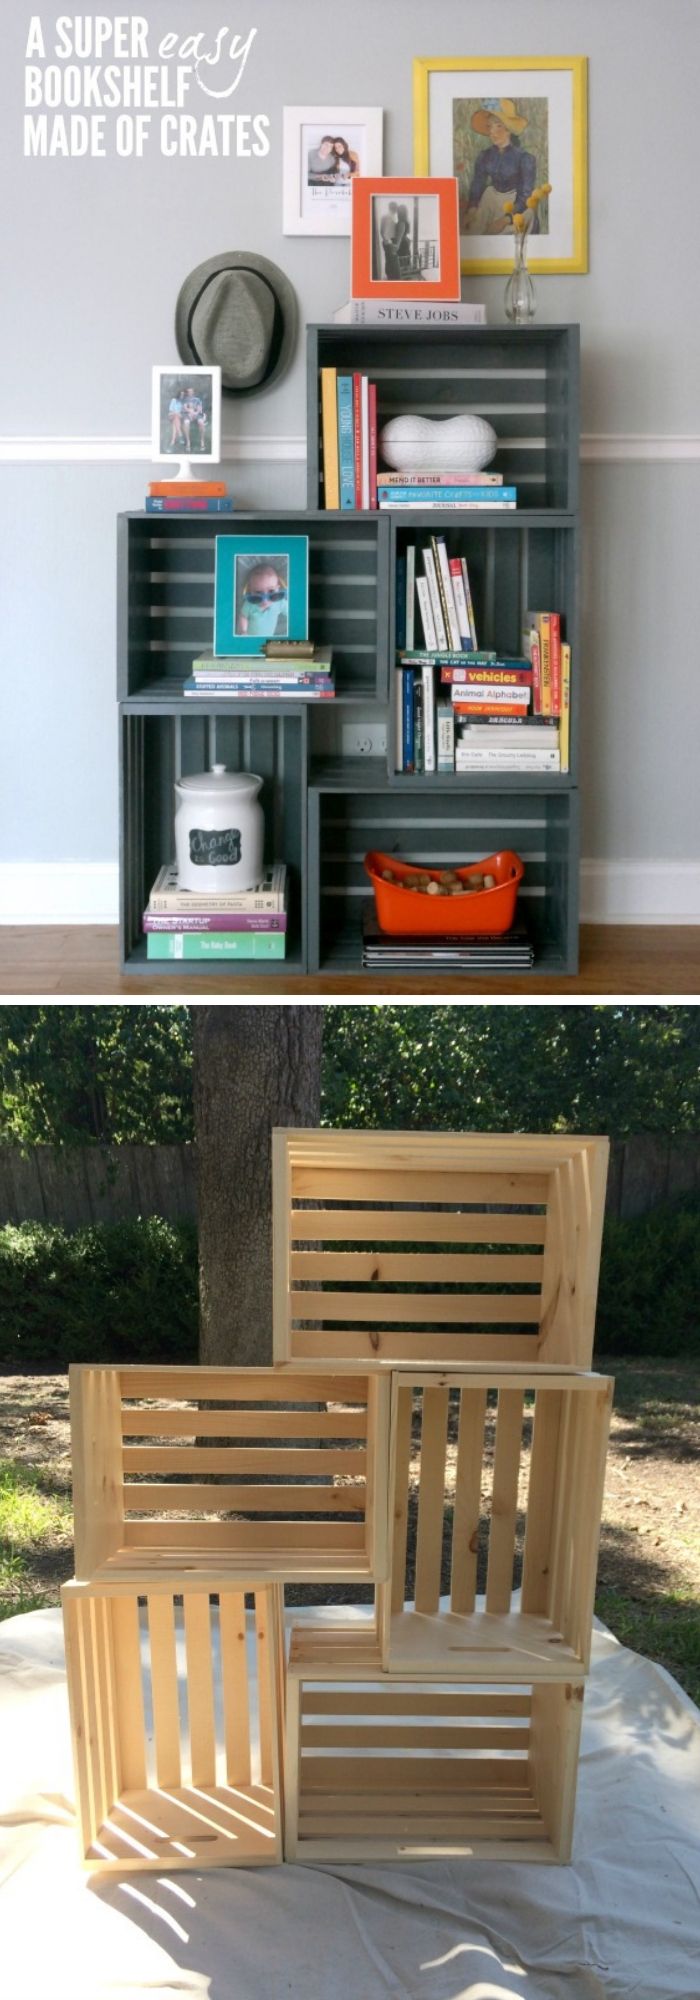 Easy Crate Bookshelf Easy DIY Bookshelf Ideas and Plans